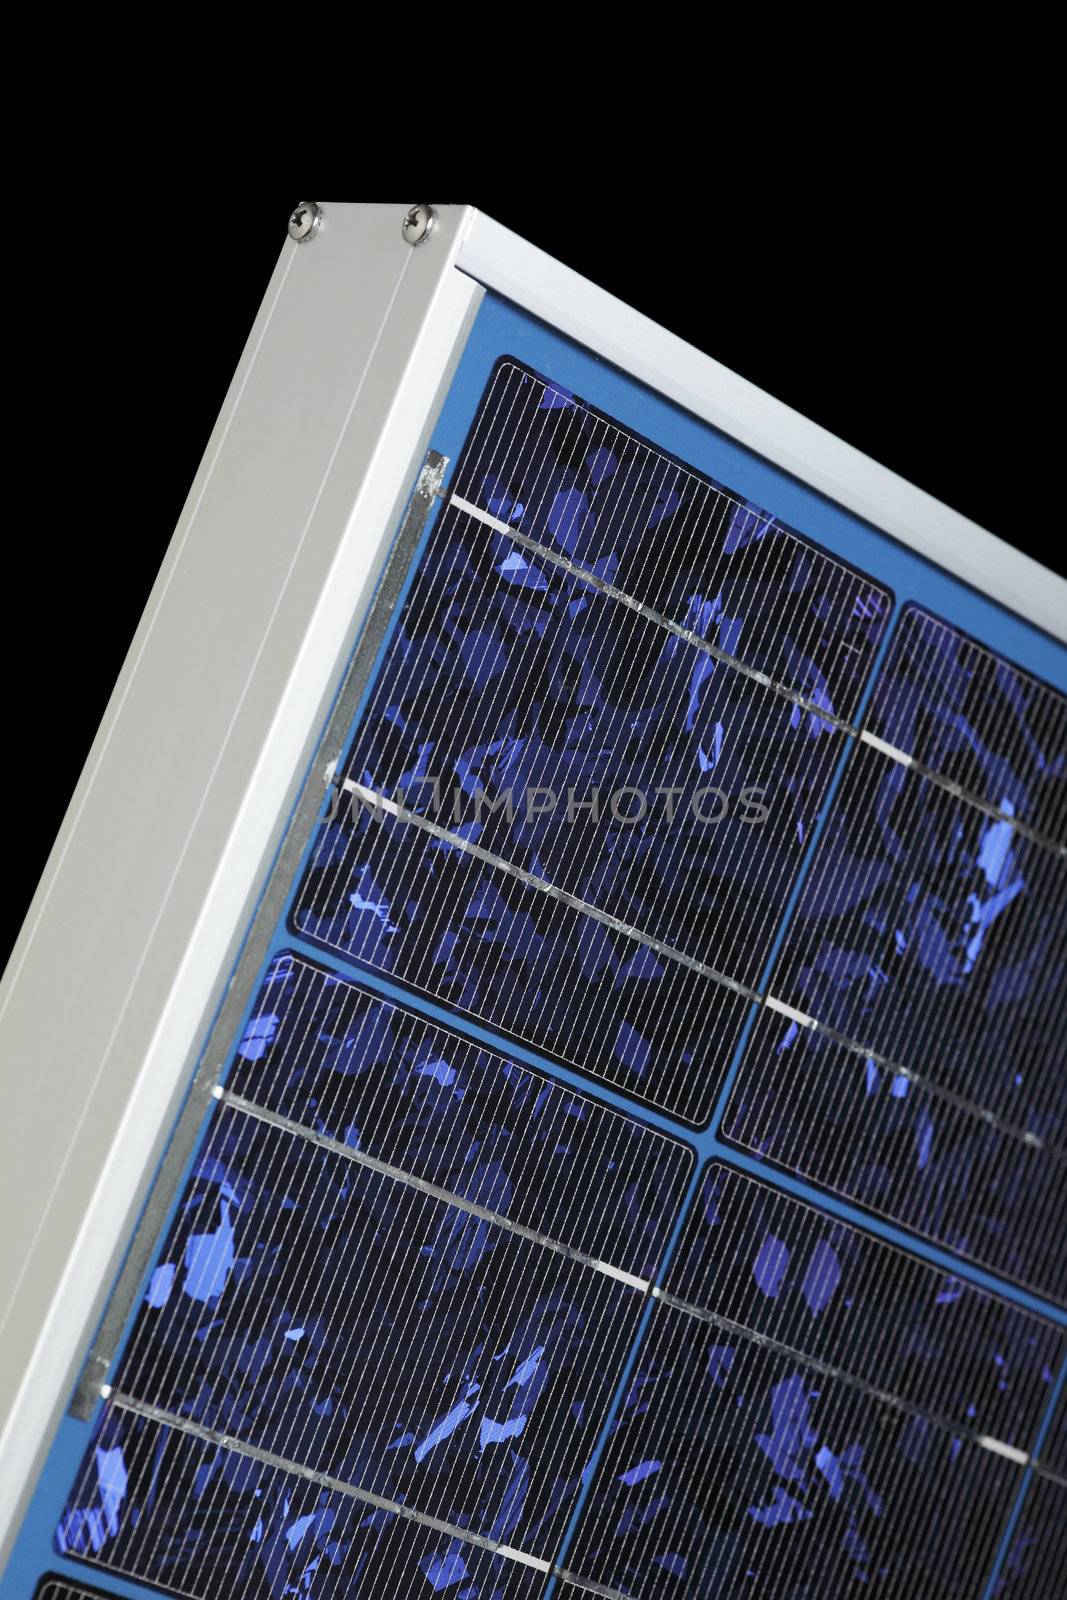 Solar Panel by Stocksnapper